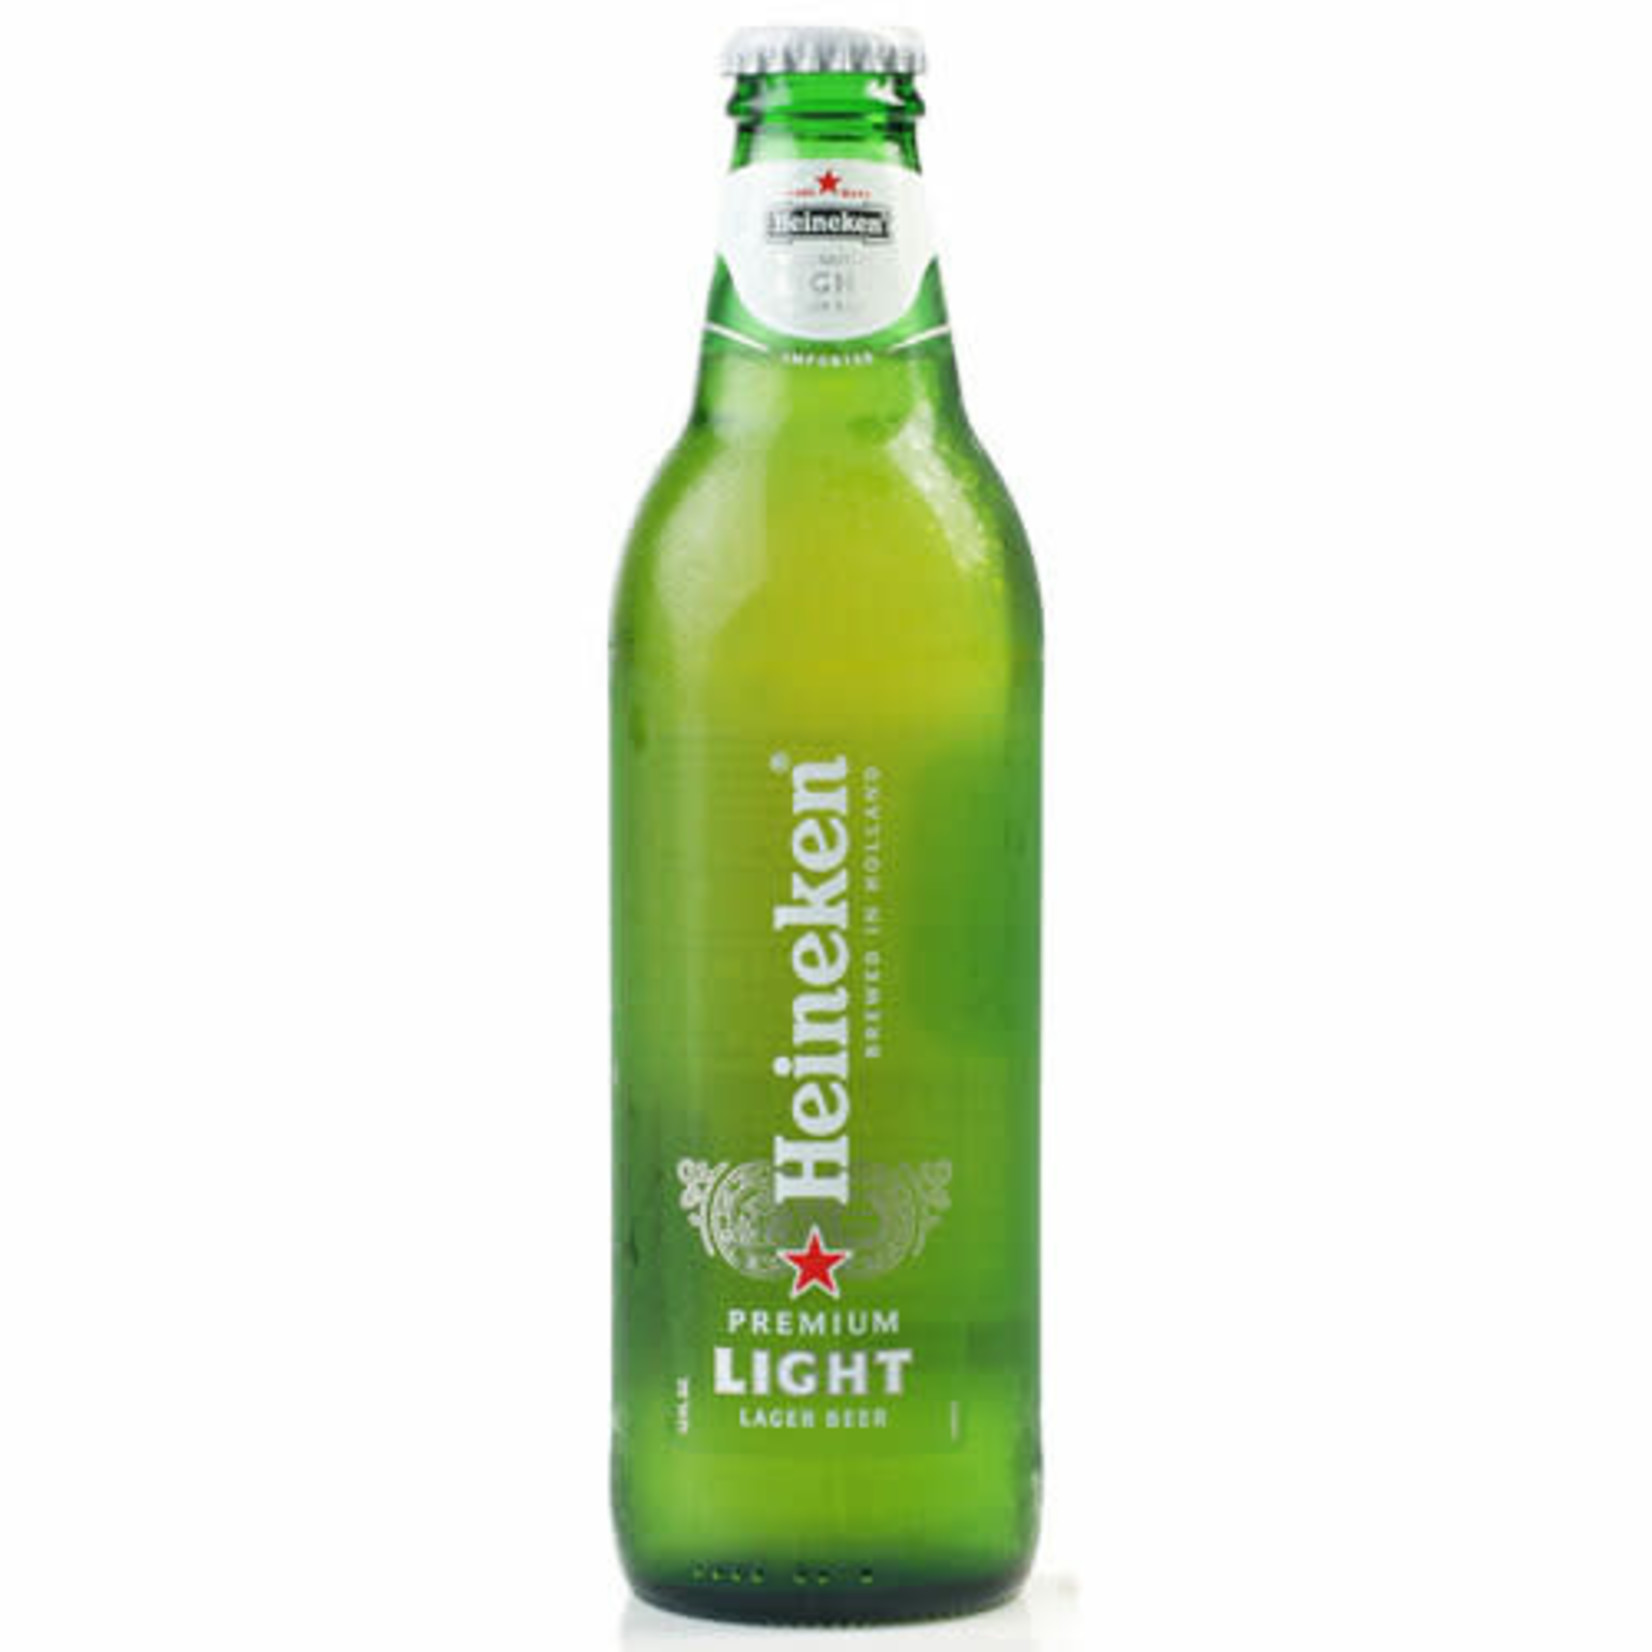 Heineken Premium Light 6 Pack Fenwick